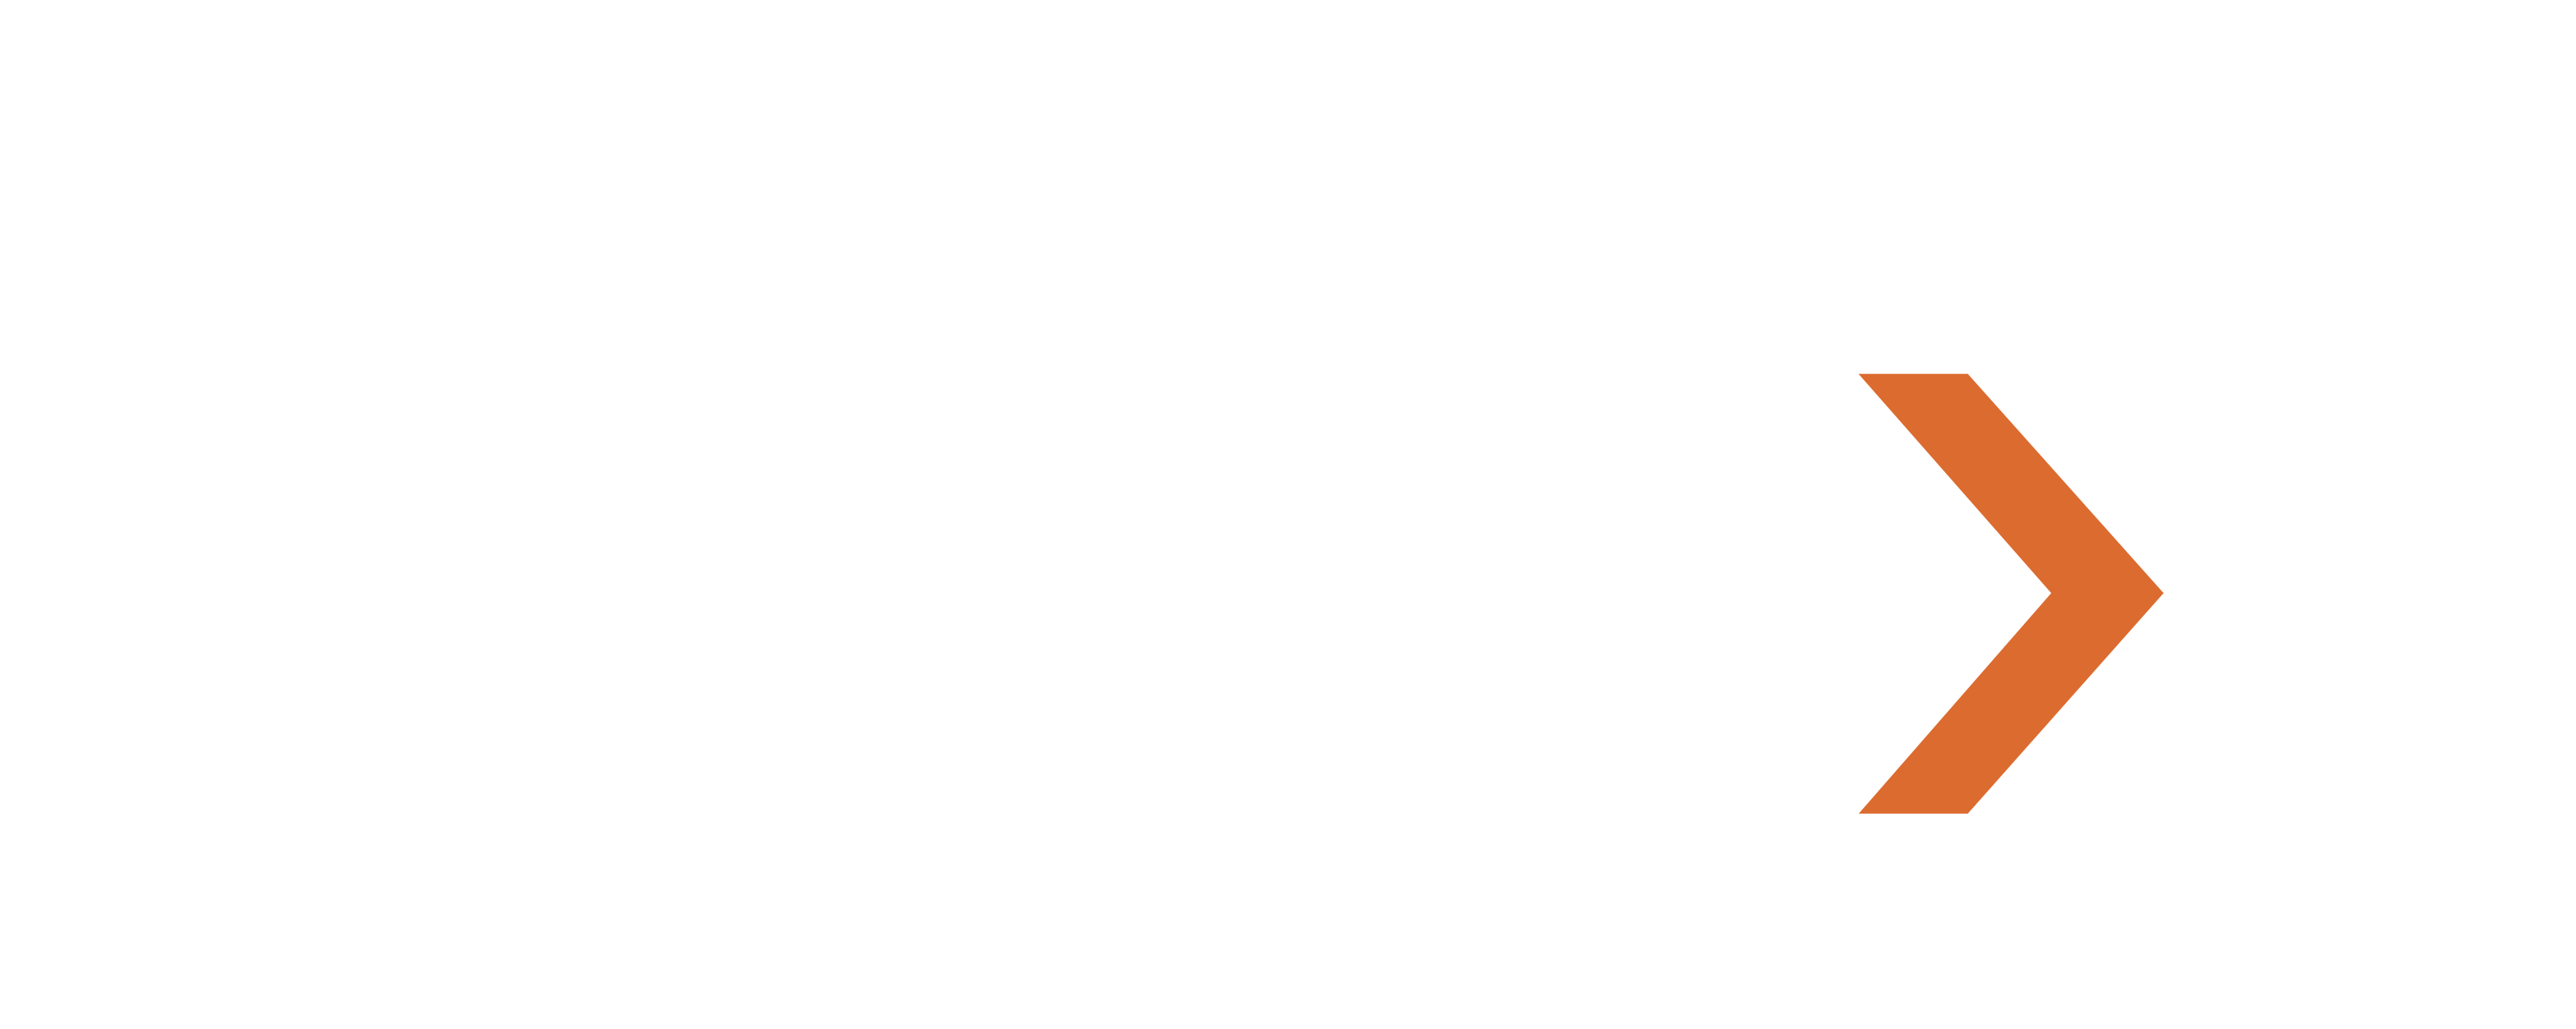 Artex_Logo_reverse.png